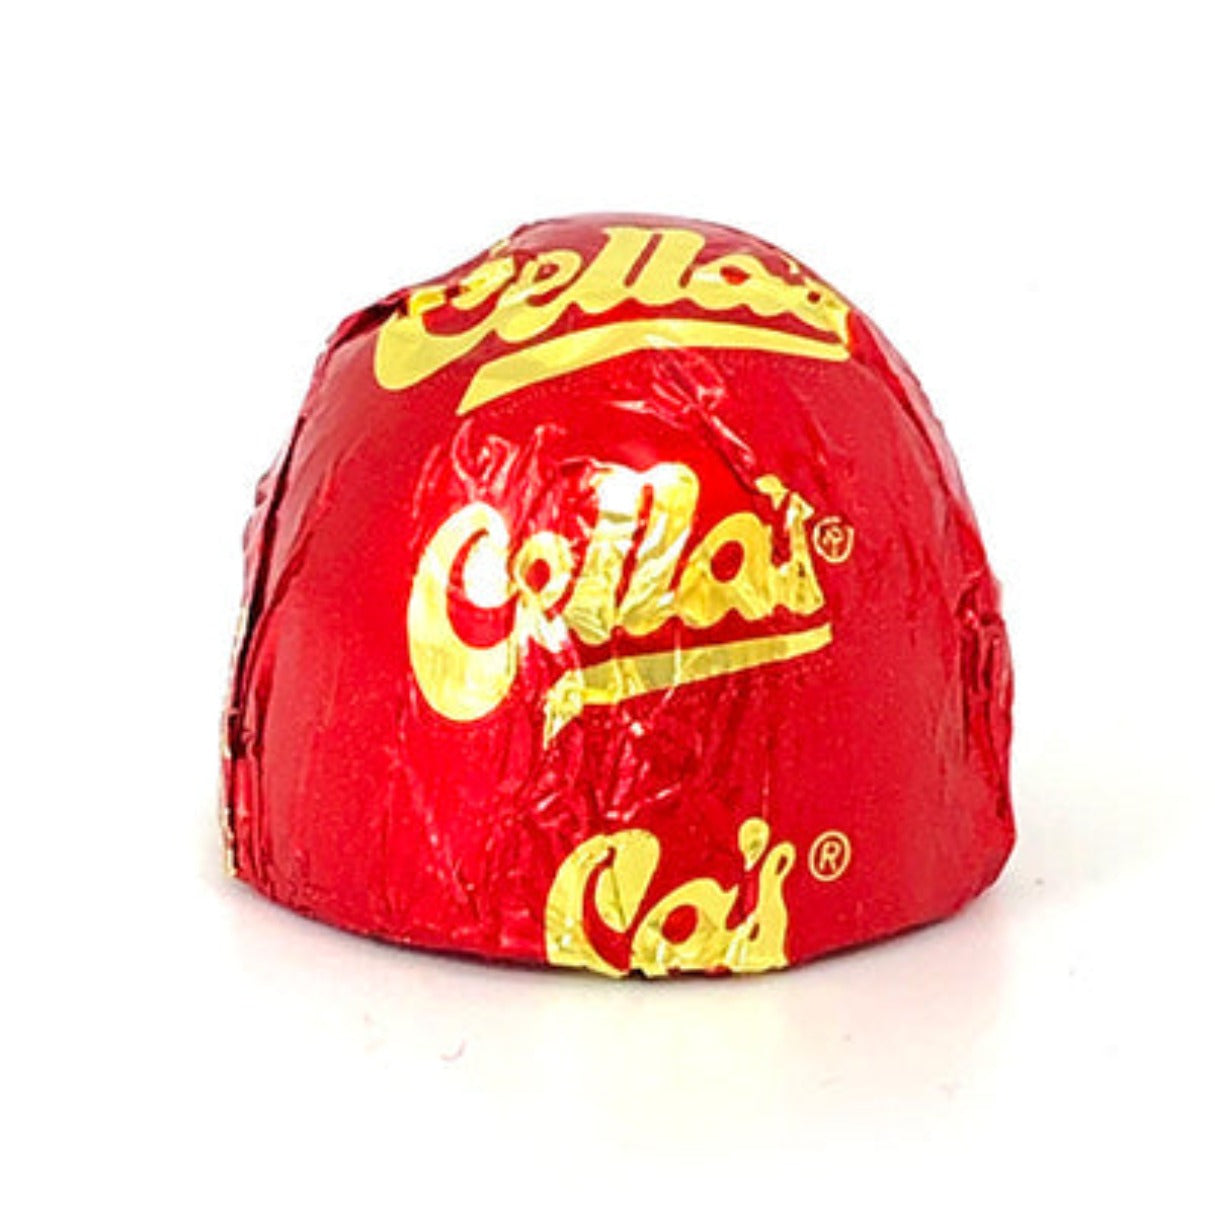 Cella's Dark Chocolate Covered Cherries 36oz - 72ct